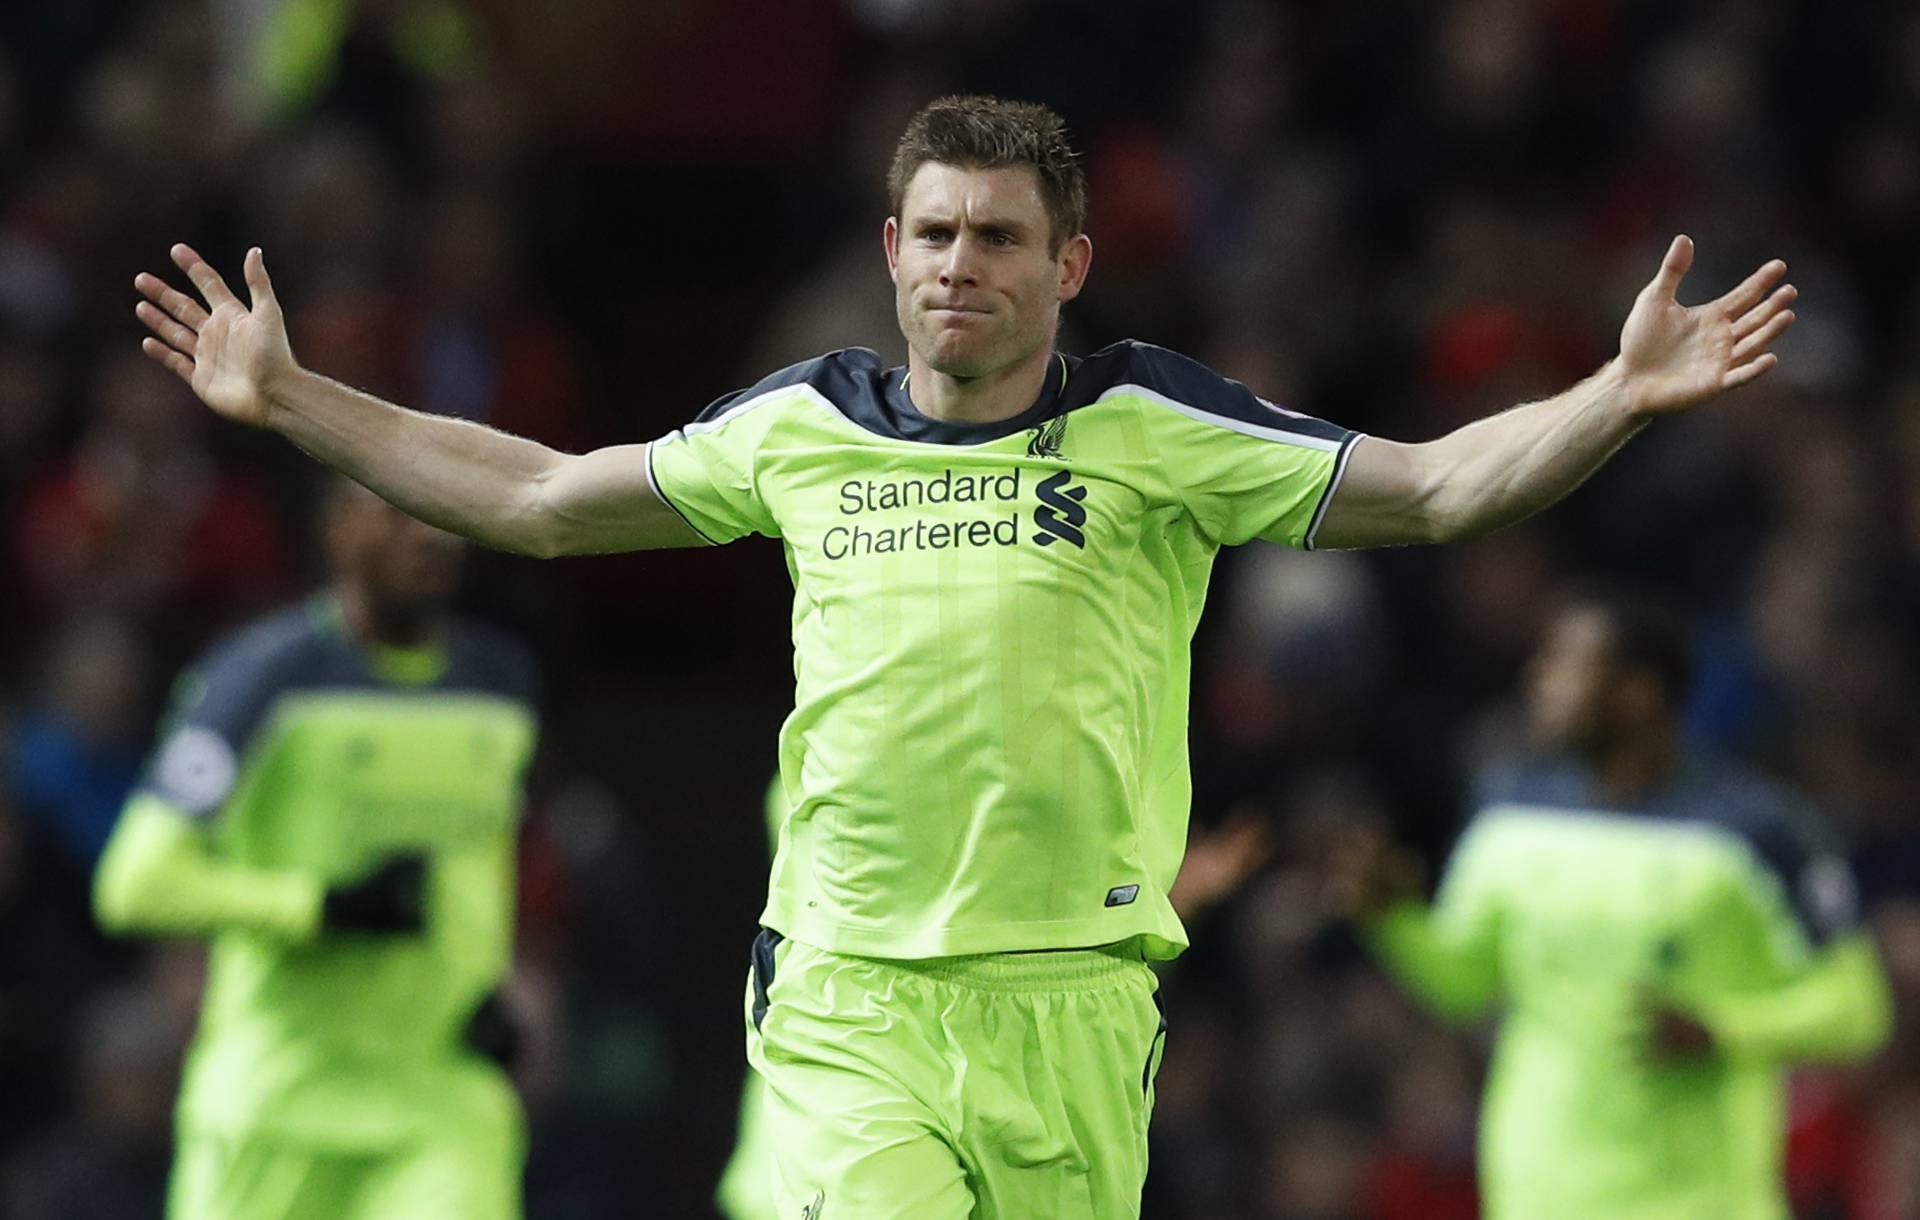 Liverpool's James Milner celebrates scoring their first goal